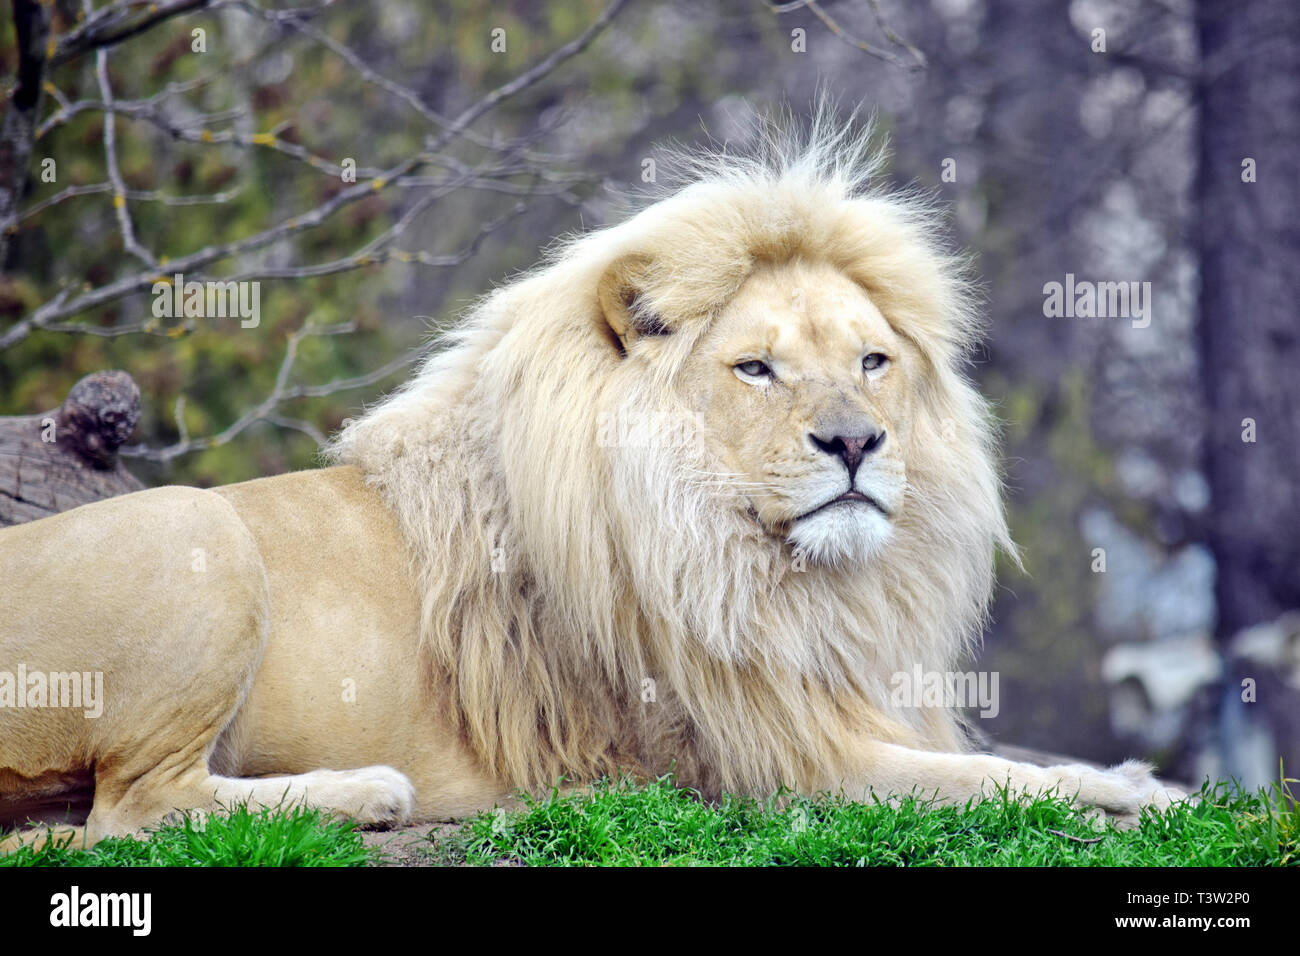 White Lion Panthera Leo Krugeri Resting on Grass Stock Photo